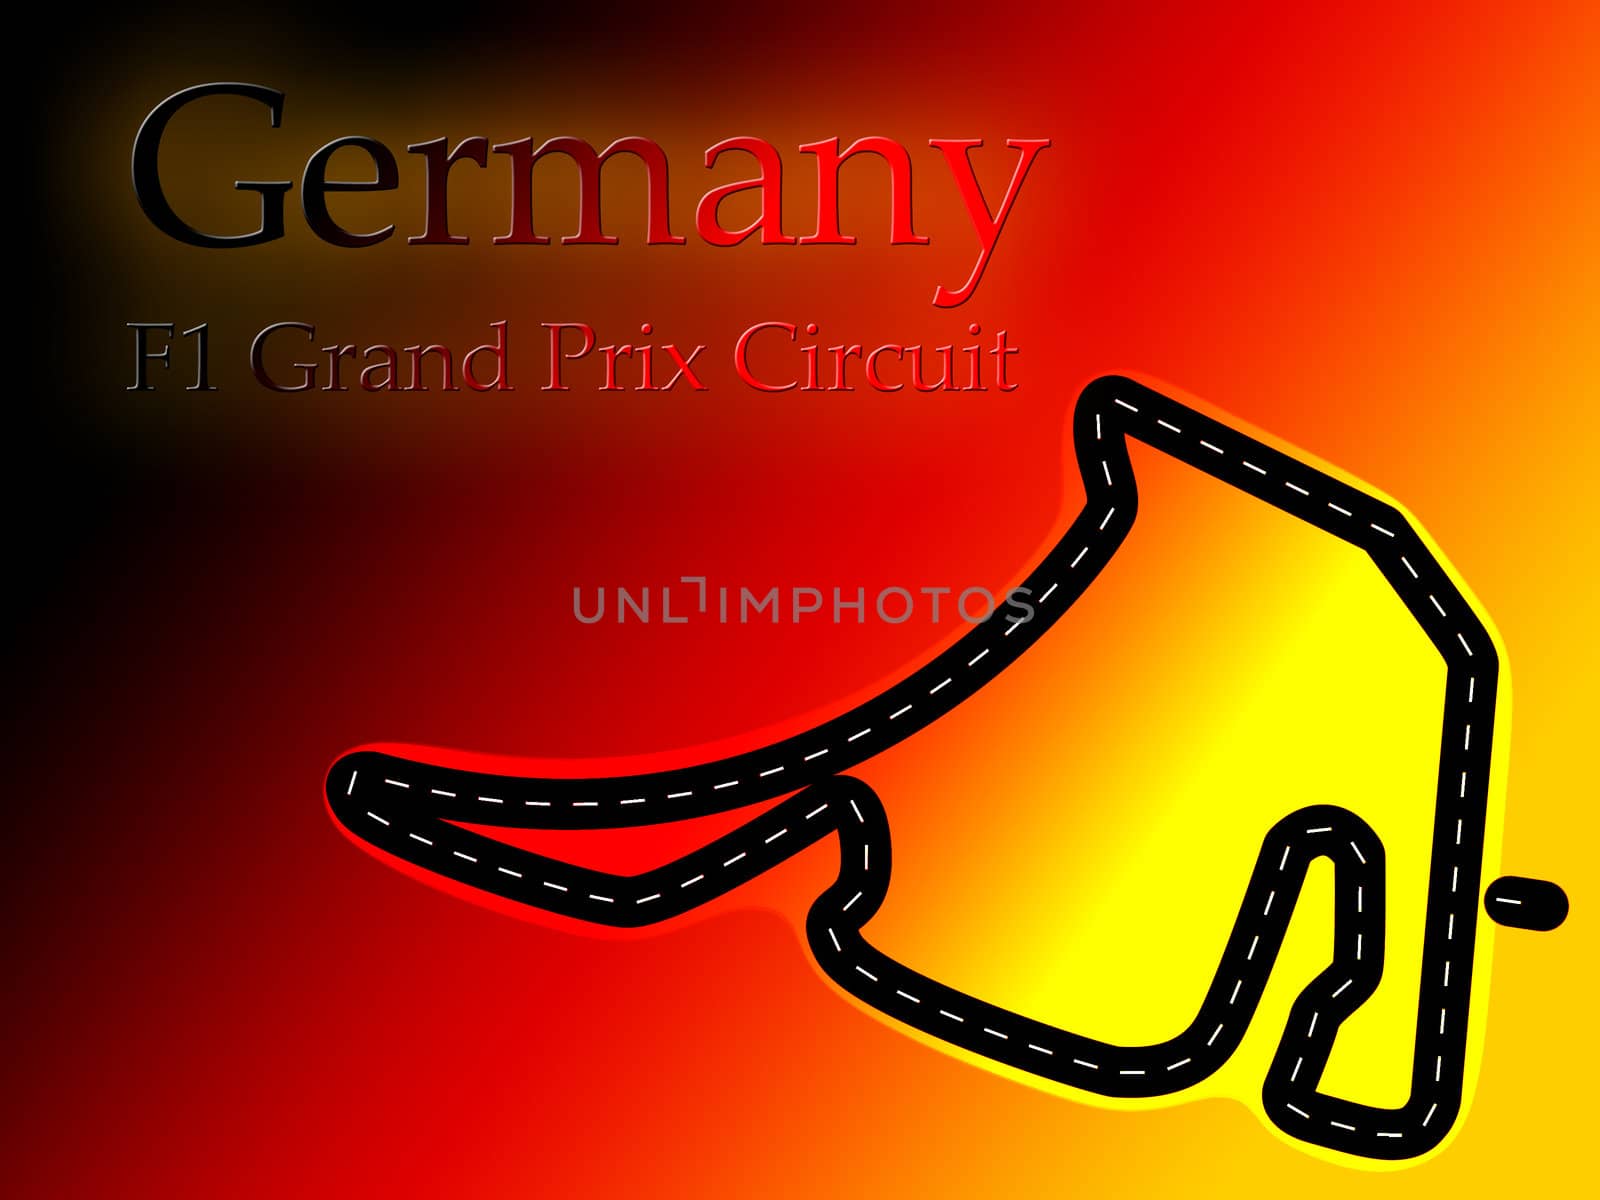 Hockheimring Germany F1 Formula 1 Racing Circuit Map by bobbigmac